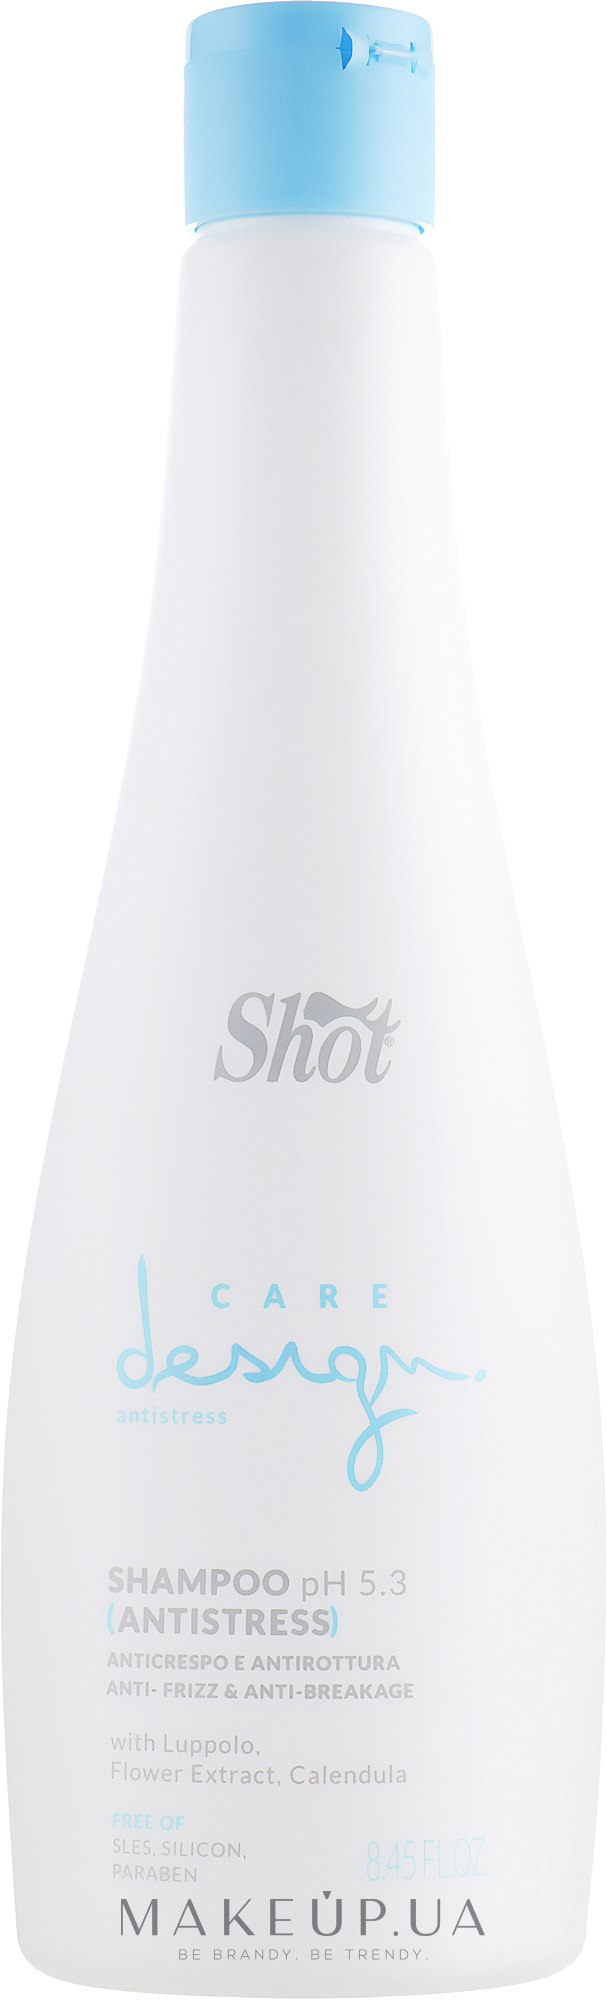 Шампунь антистресс против ломкости волос - Shot Care Design Antistress Shampoo — фото 250ml